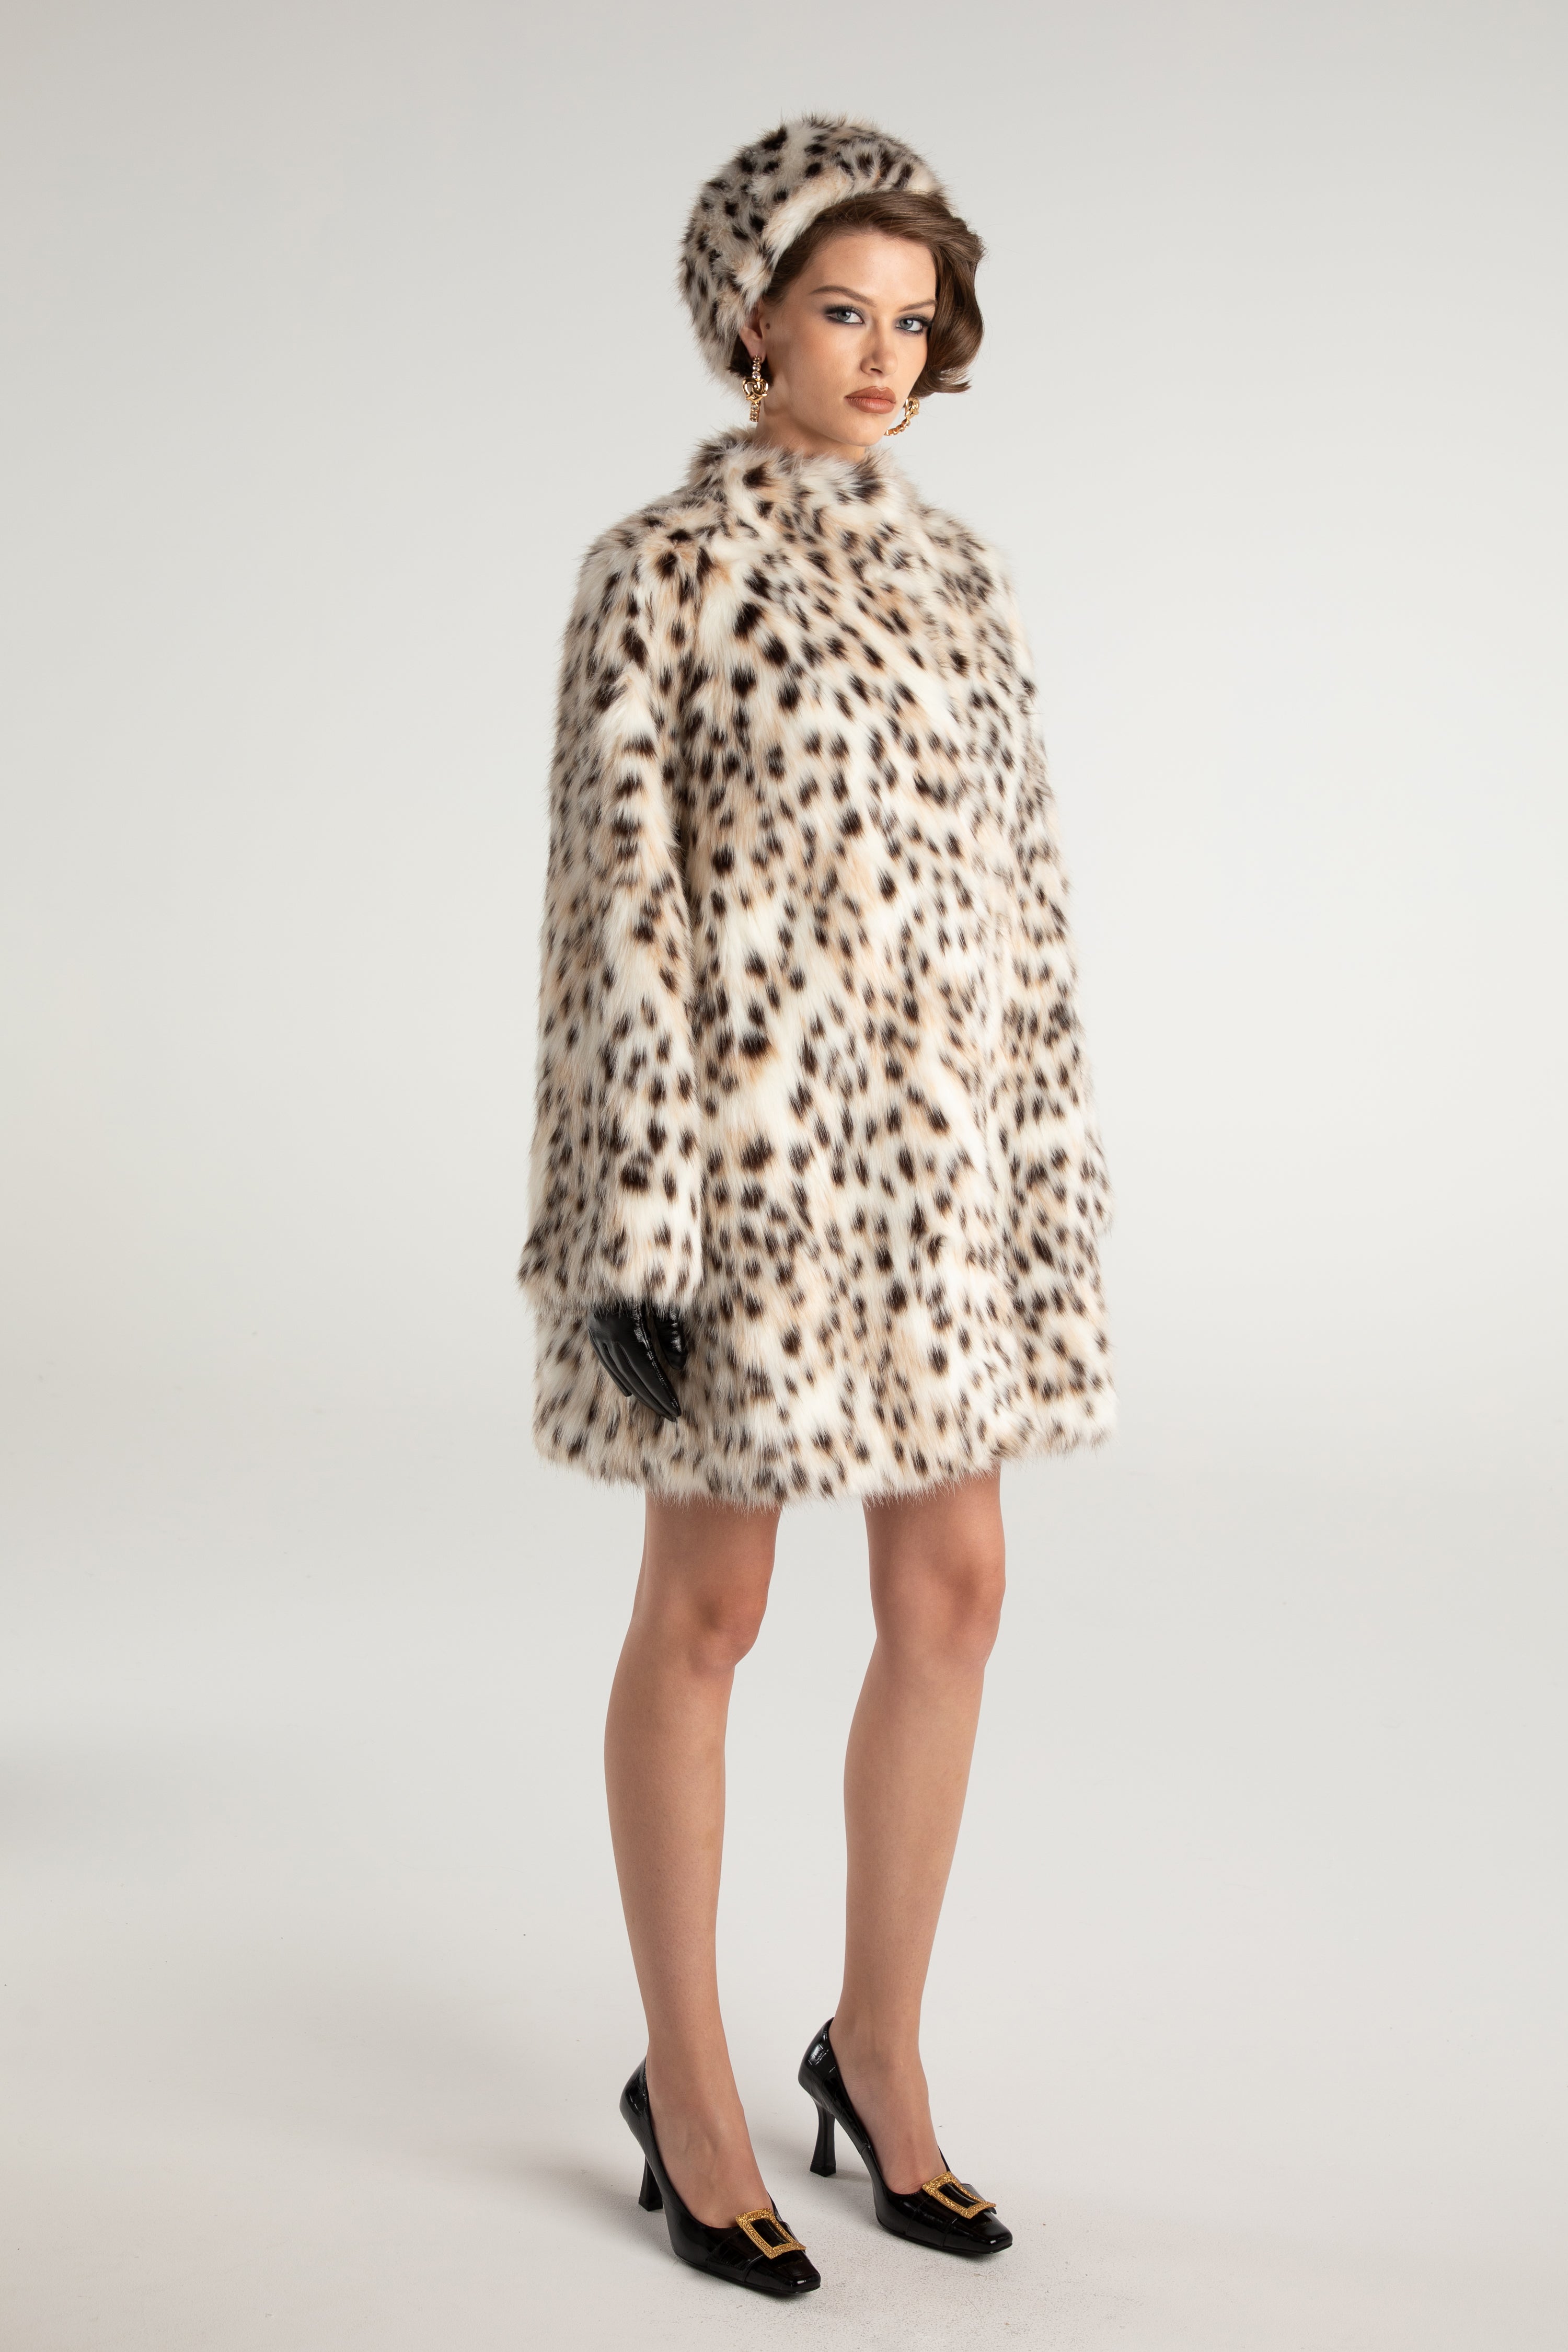 ATHENA Faux Fur Animal Print Coat - Buy ATHENA Faux Fur Animal